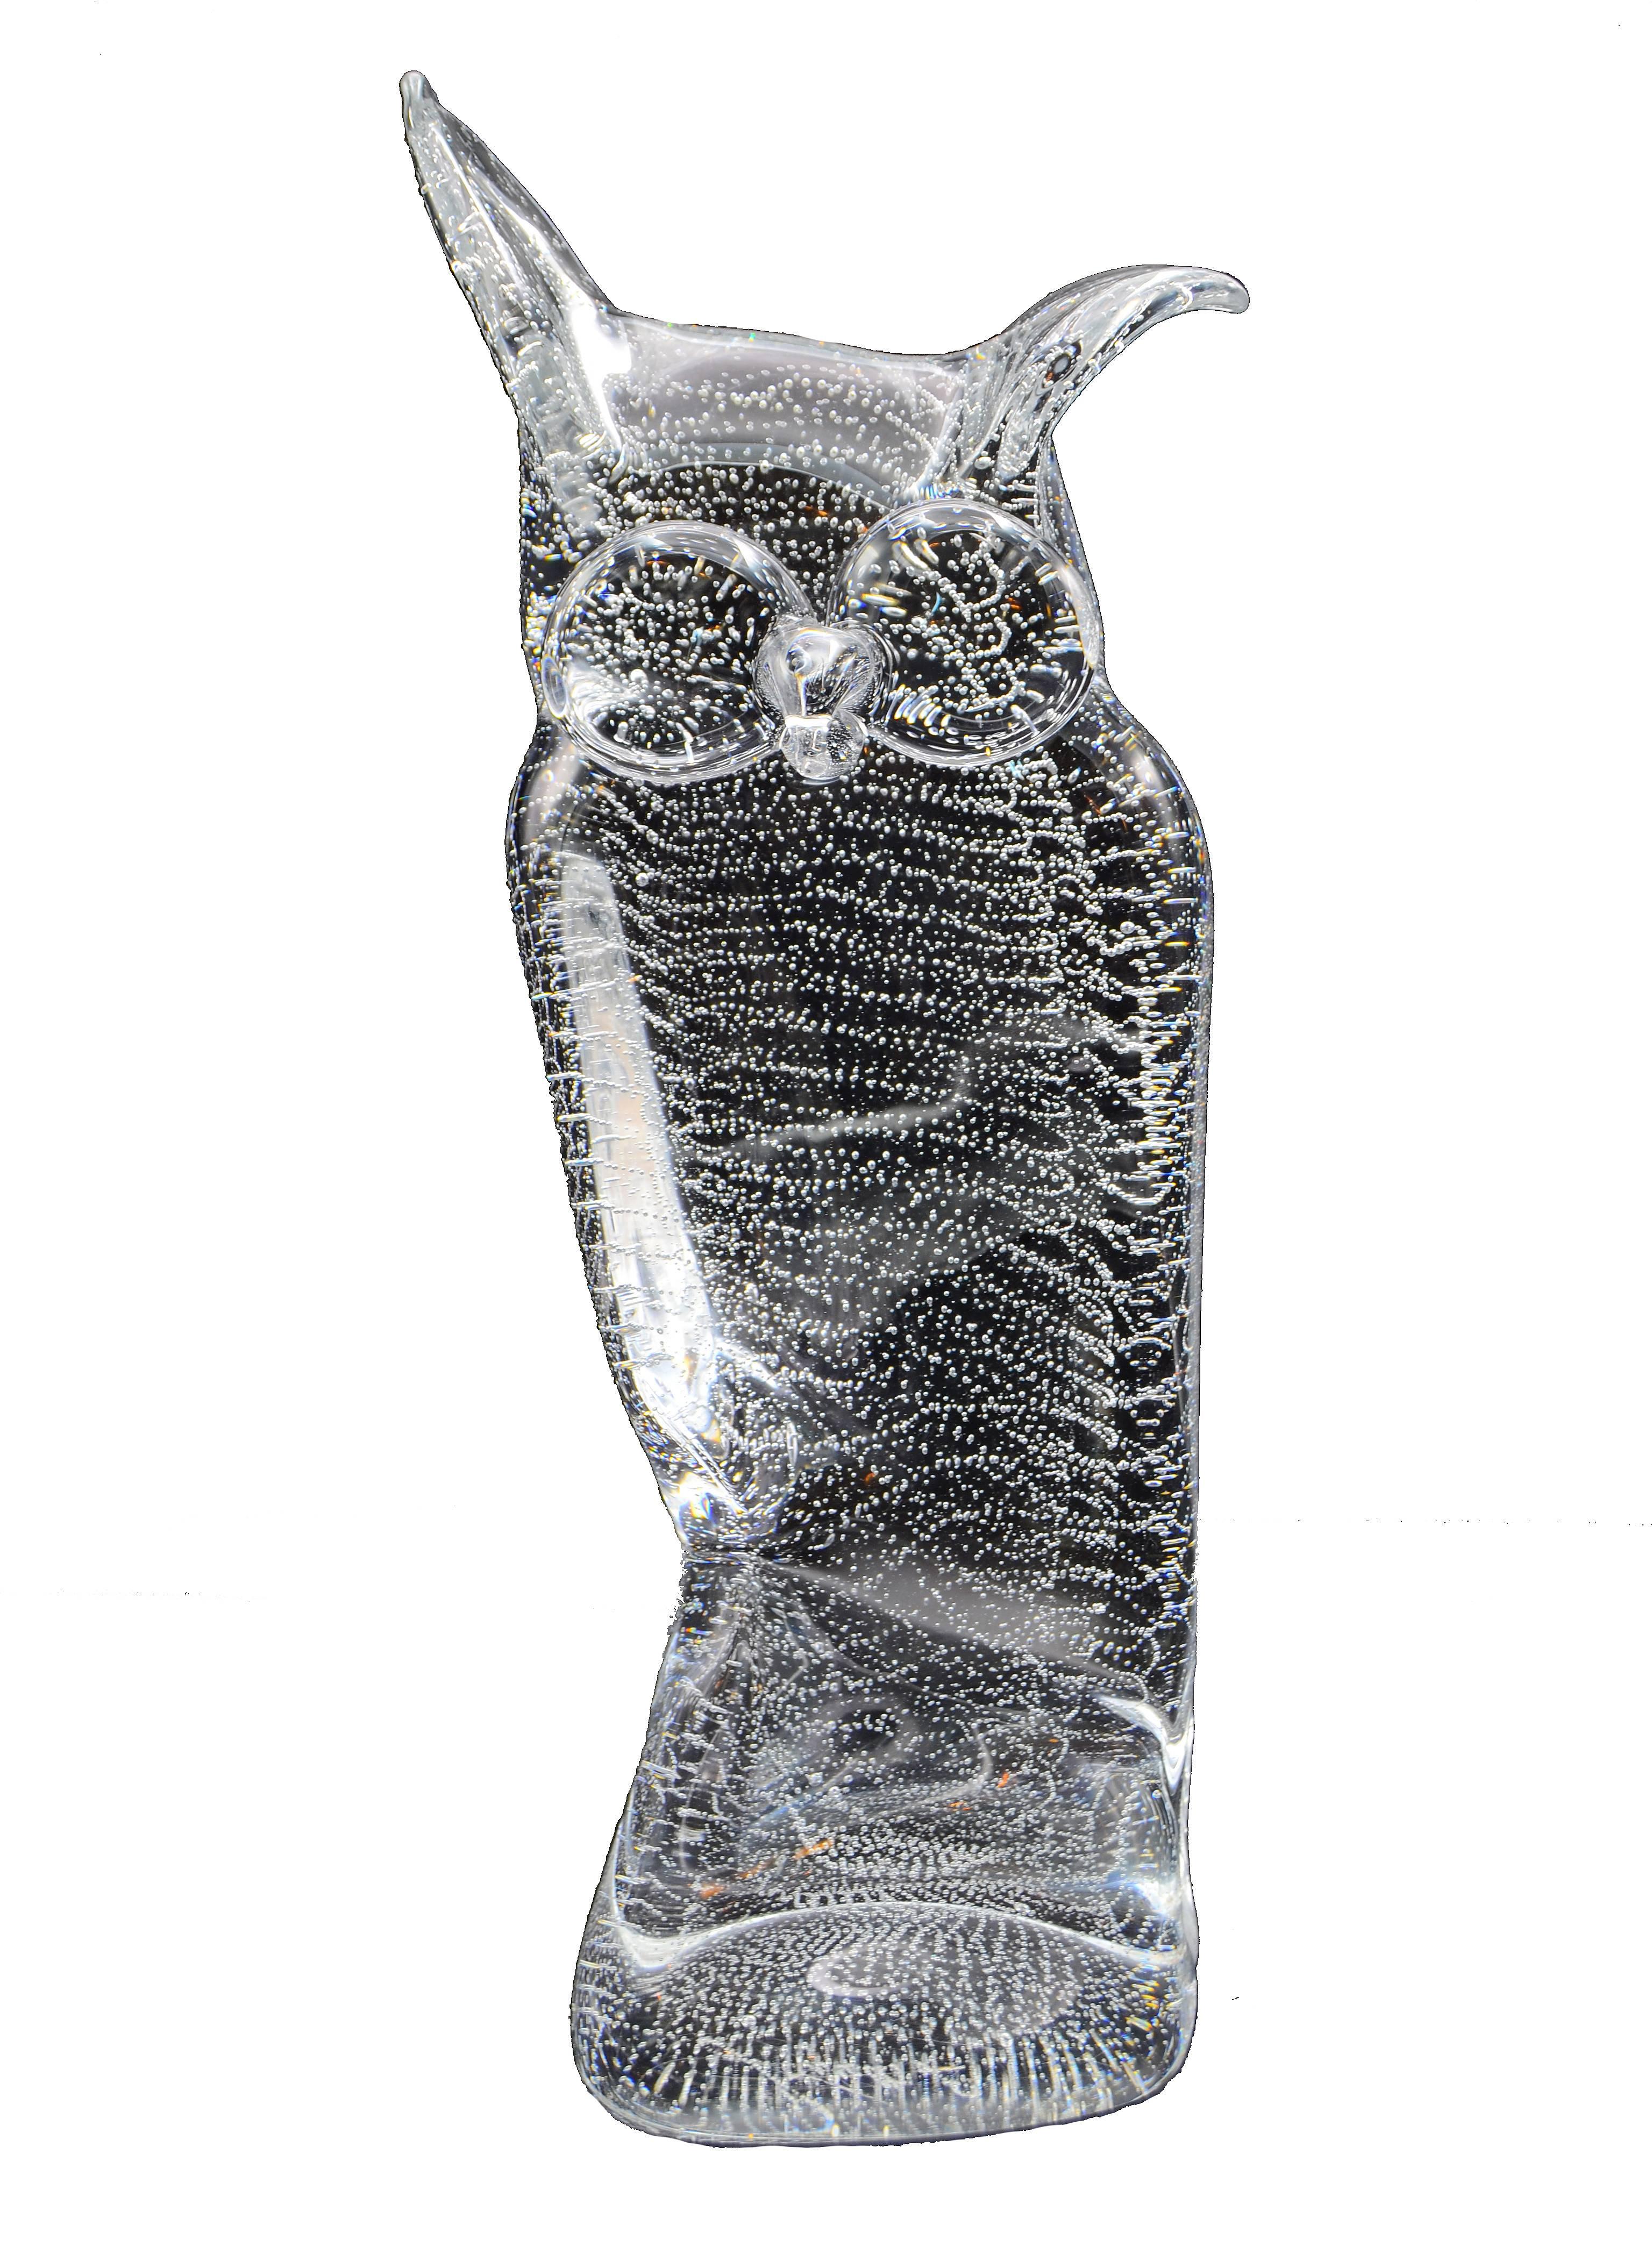 Licio Zanetti Murano glass owl with countless 'Bollicine'. Made with the Massello Technique, developed by Flavio Poli in the 1920s, using one solid block of glass.
Produced in Murano at Zanetti Murano, srl.
  